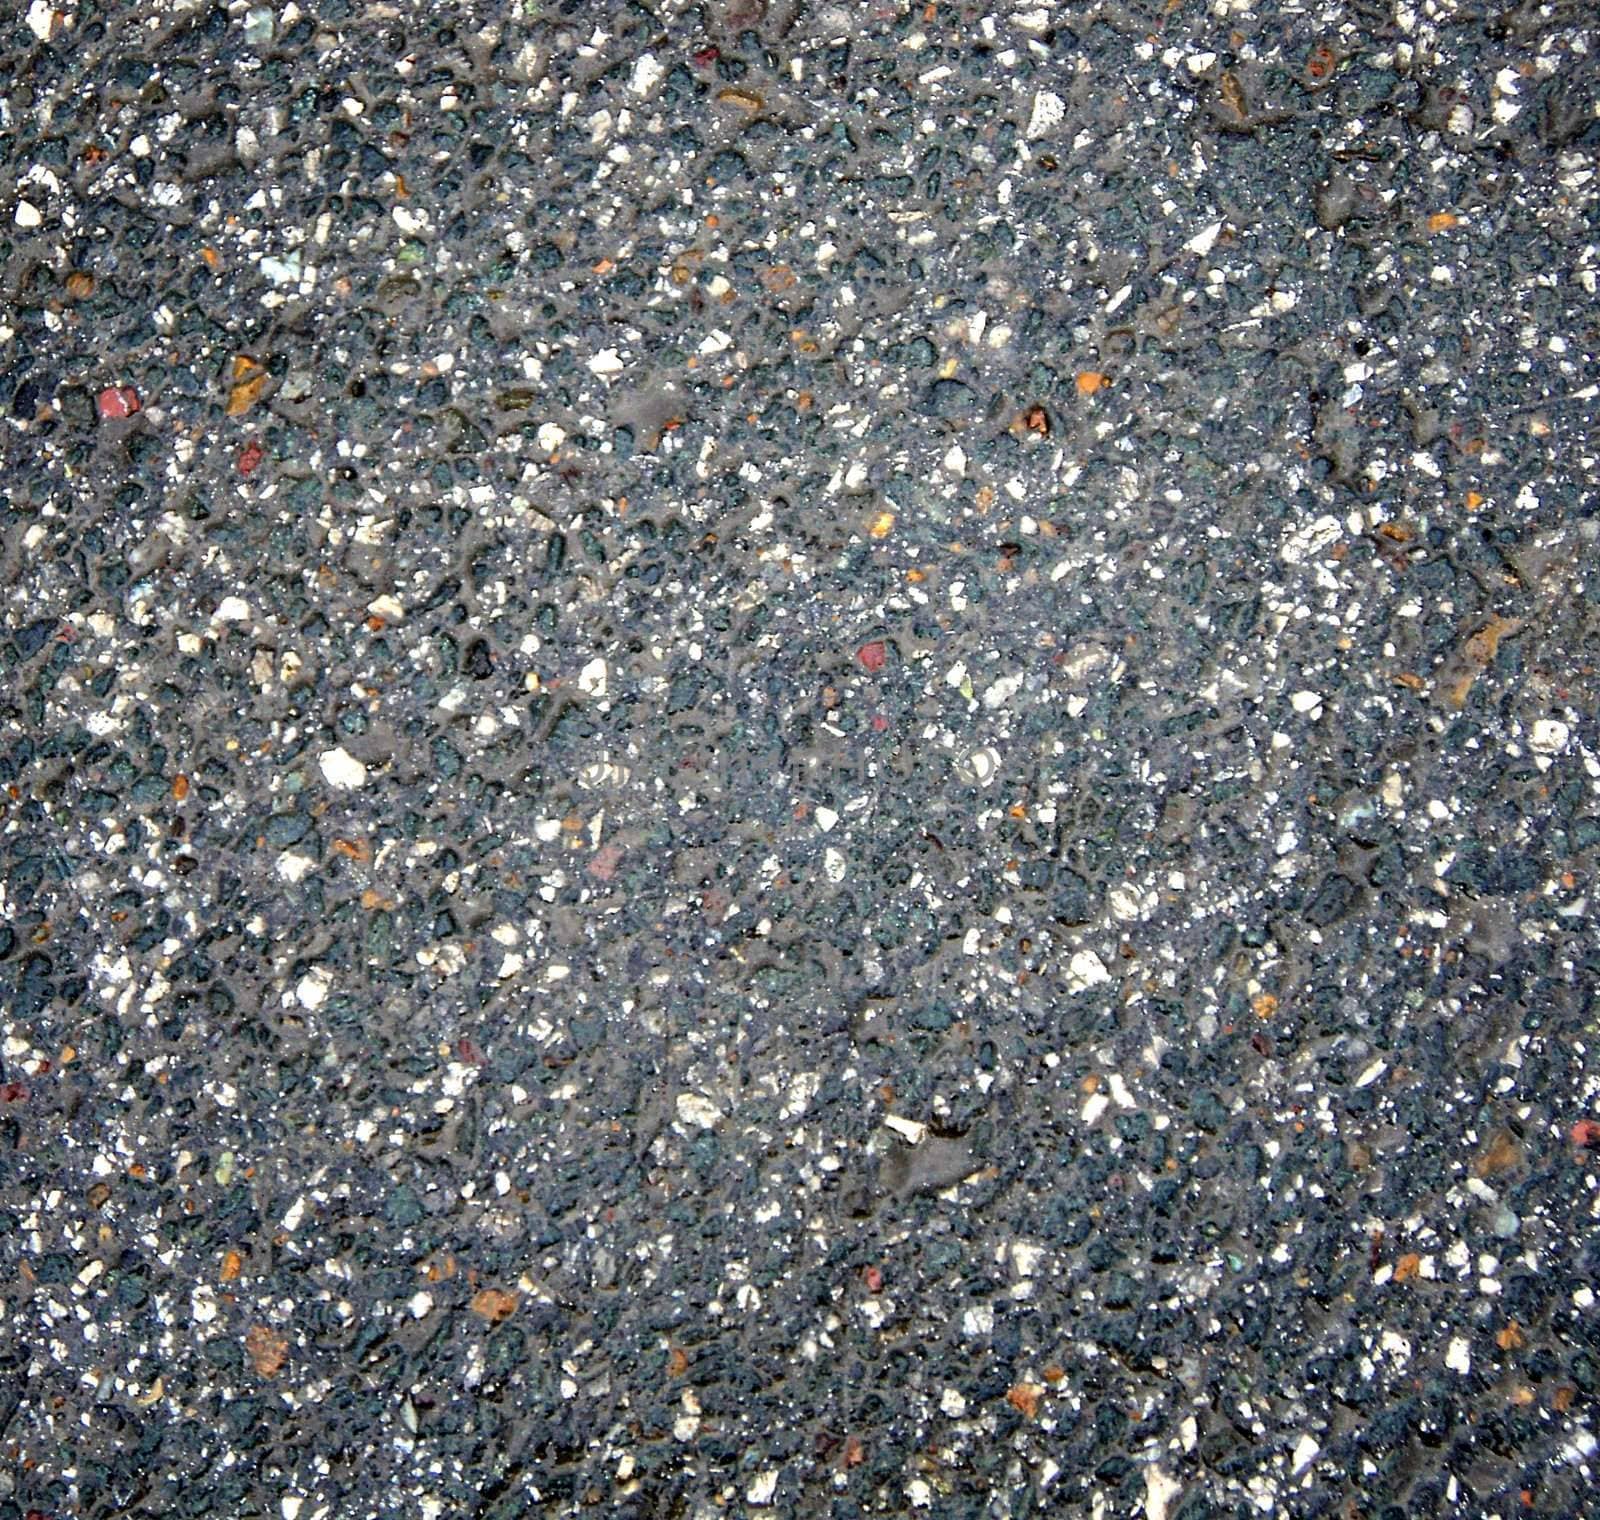 Grey wet asphalt after rain